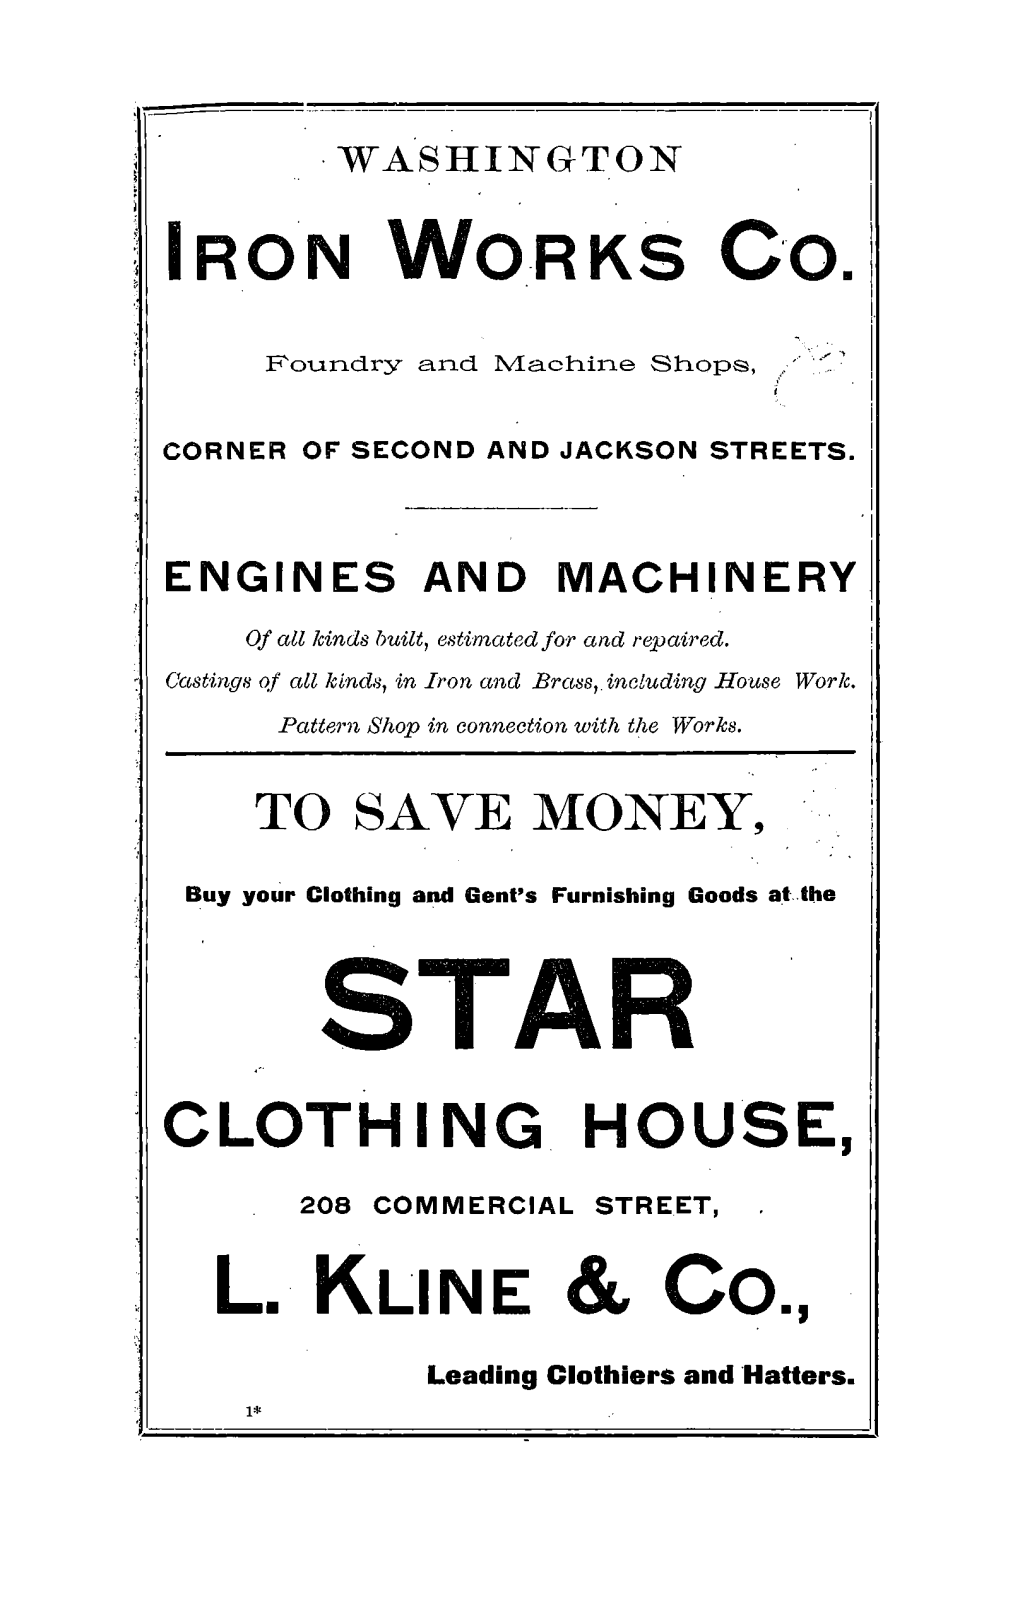 IRON WORKS CO. CLOTHING HOUSE, L. KLINE & Co